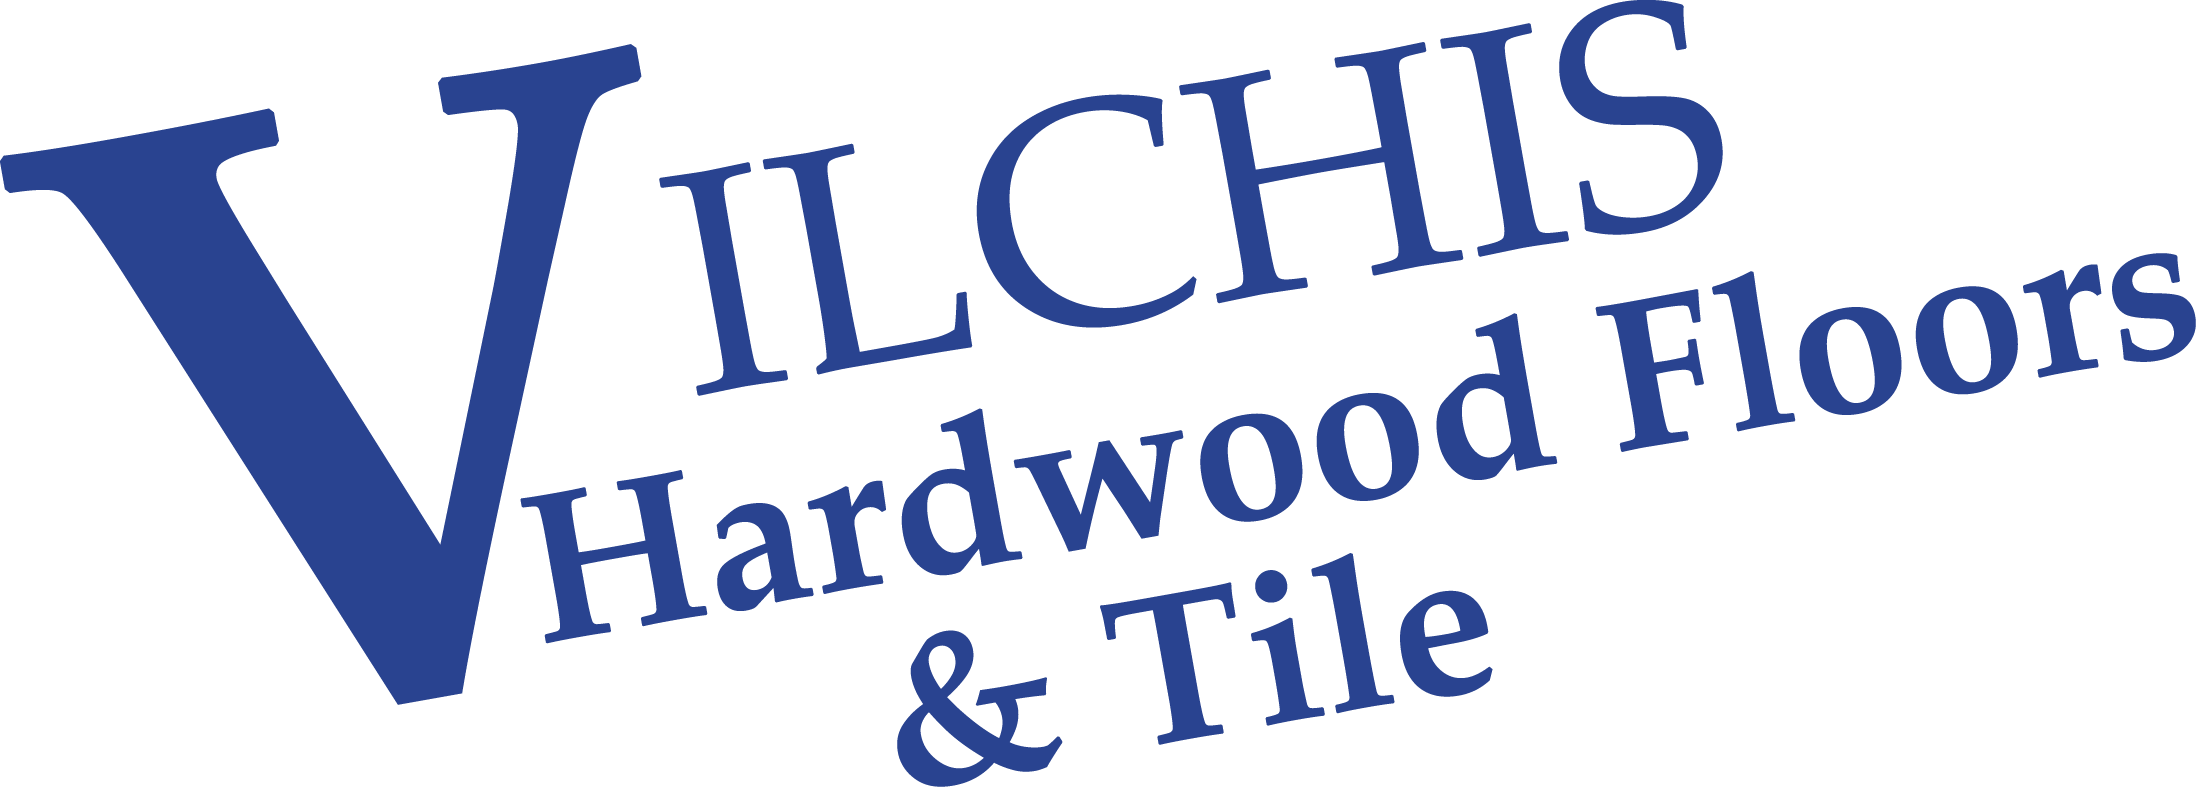 Vilchis Hardwood Floors